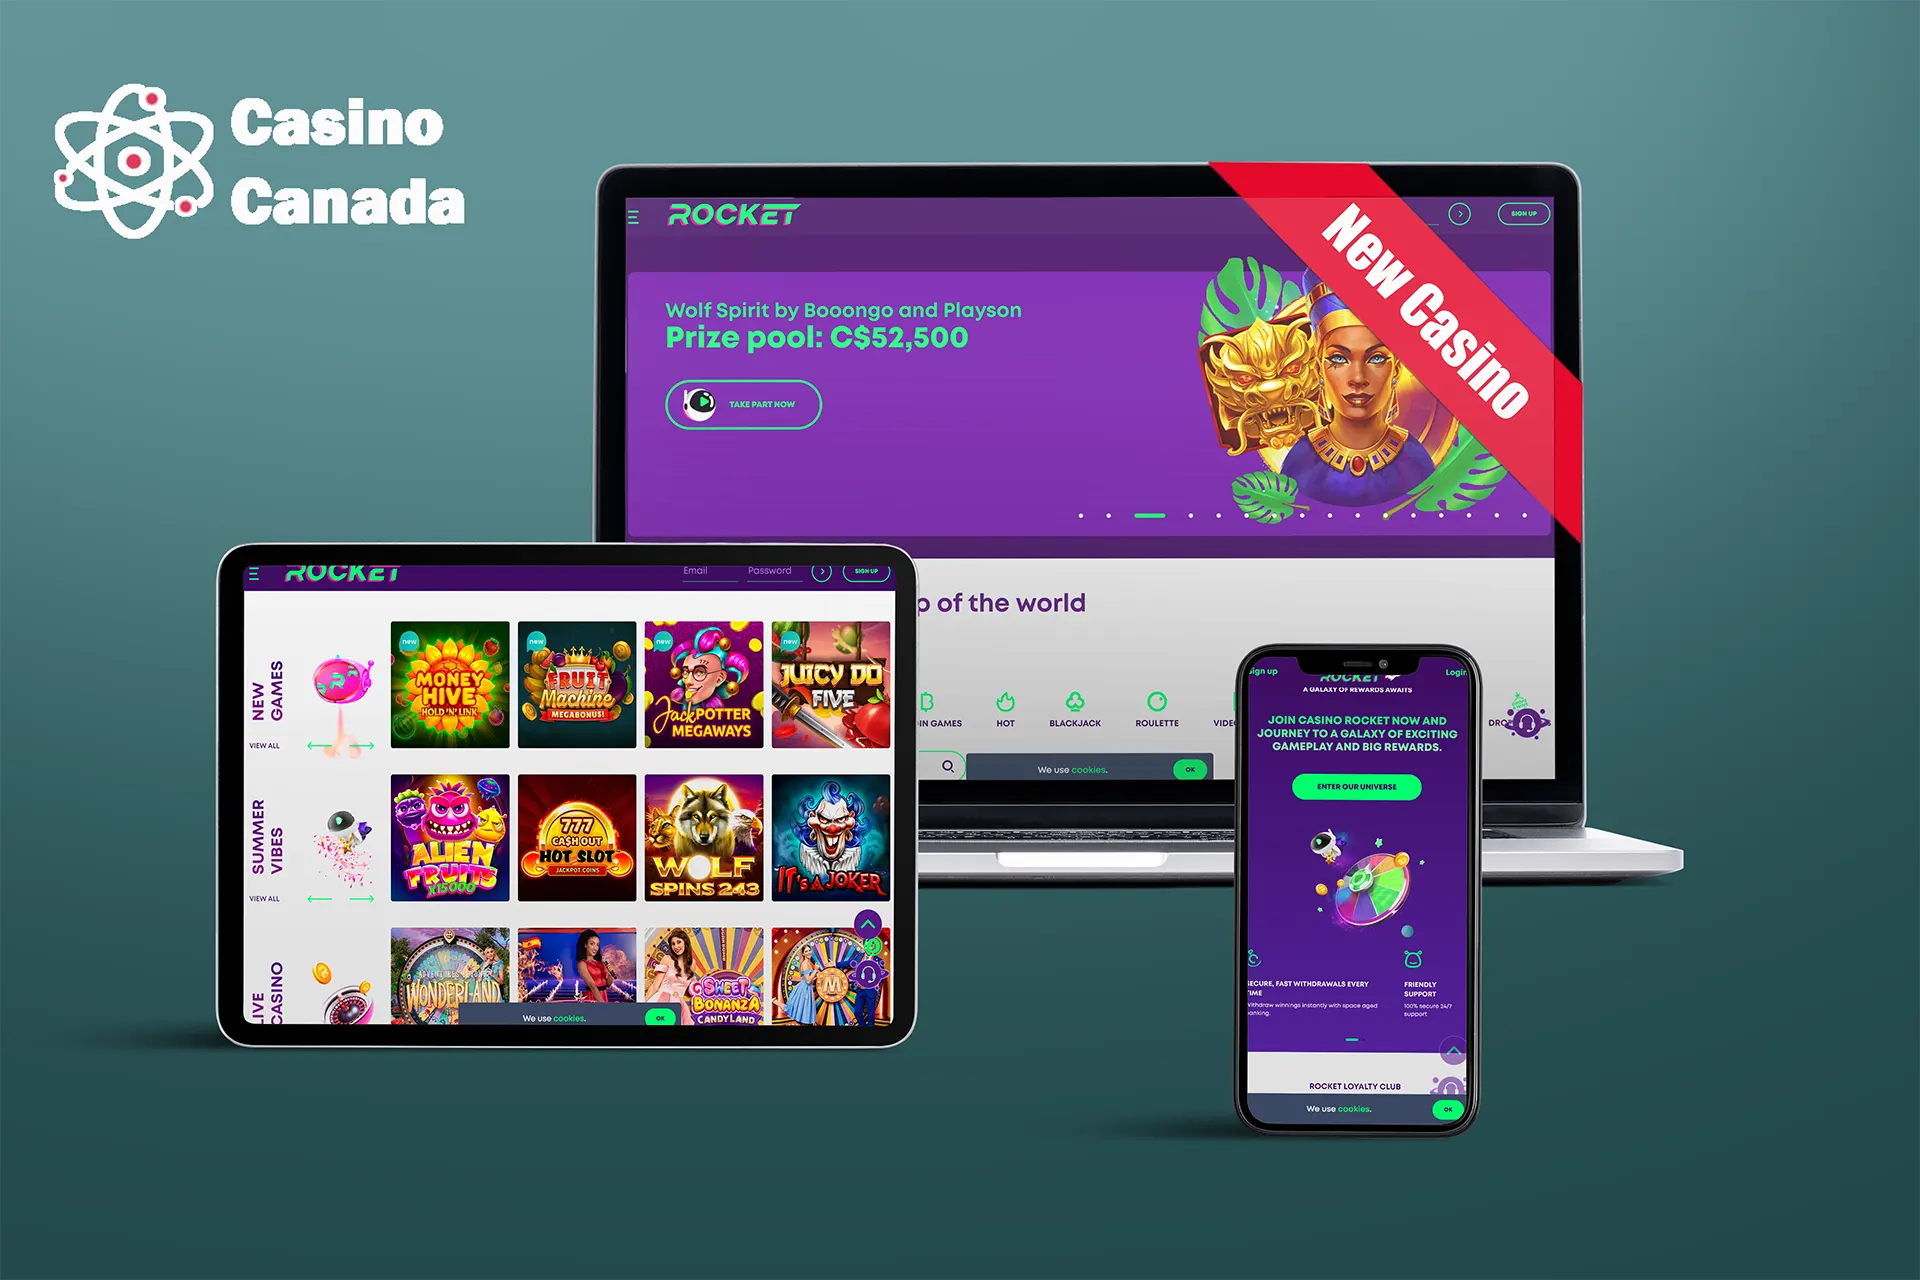 Screenshots of the Rocket New Casino